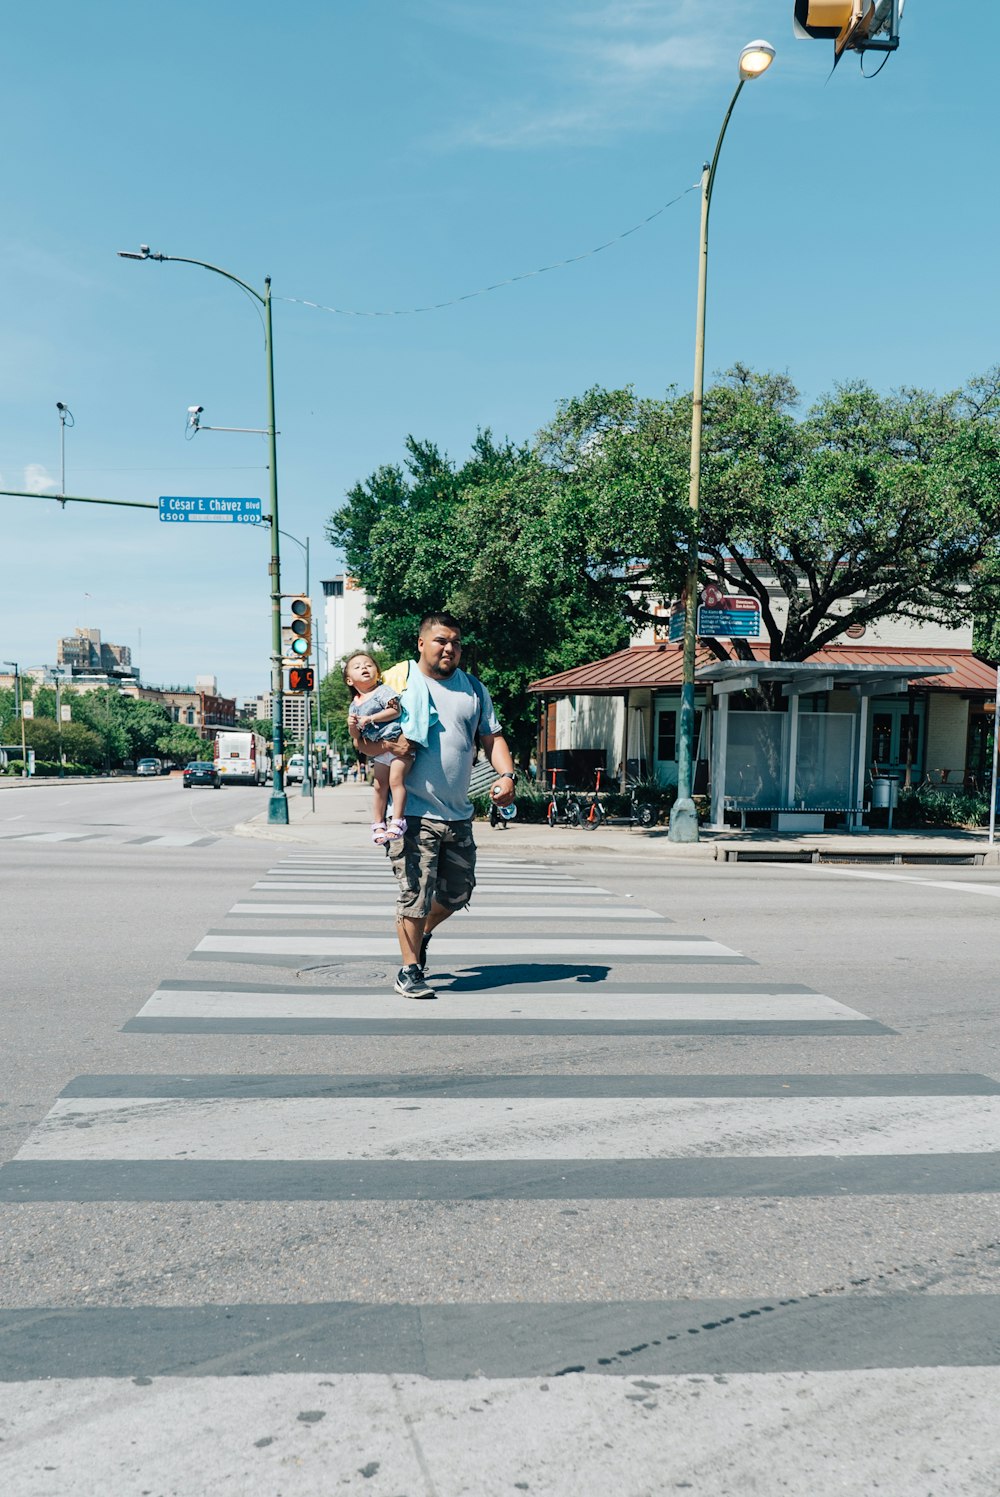 man wearing white carrying toddler crossing on pedestrian line